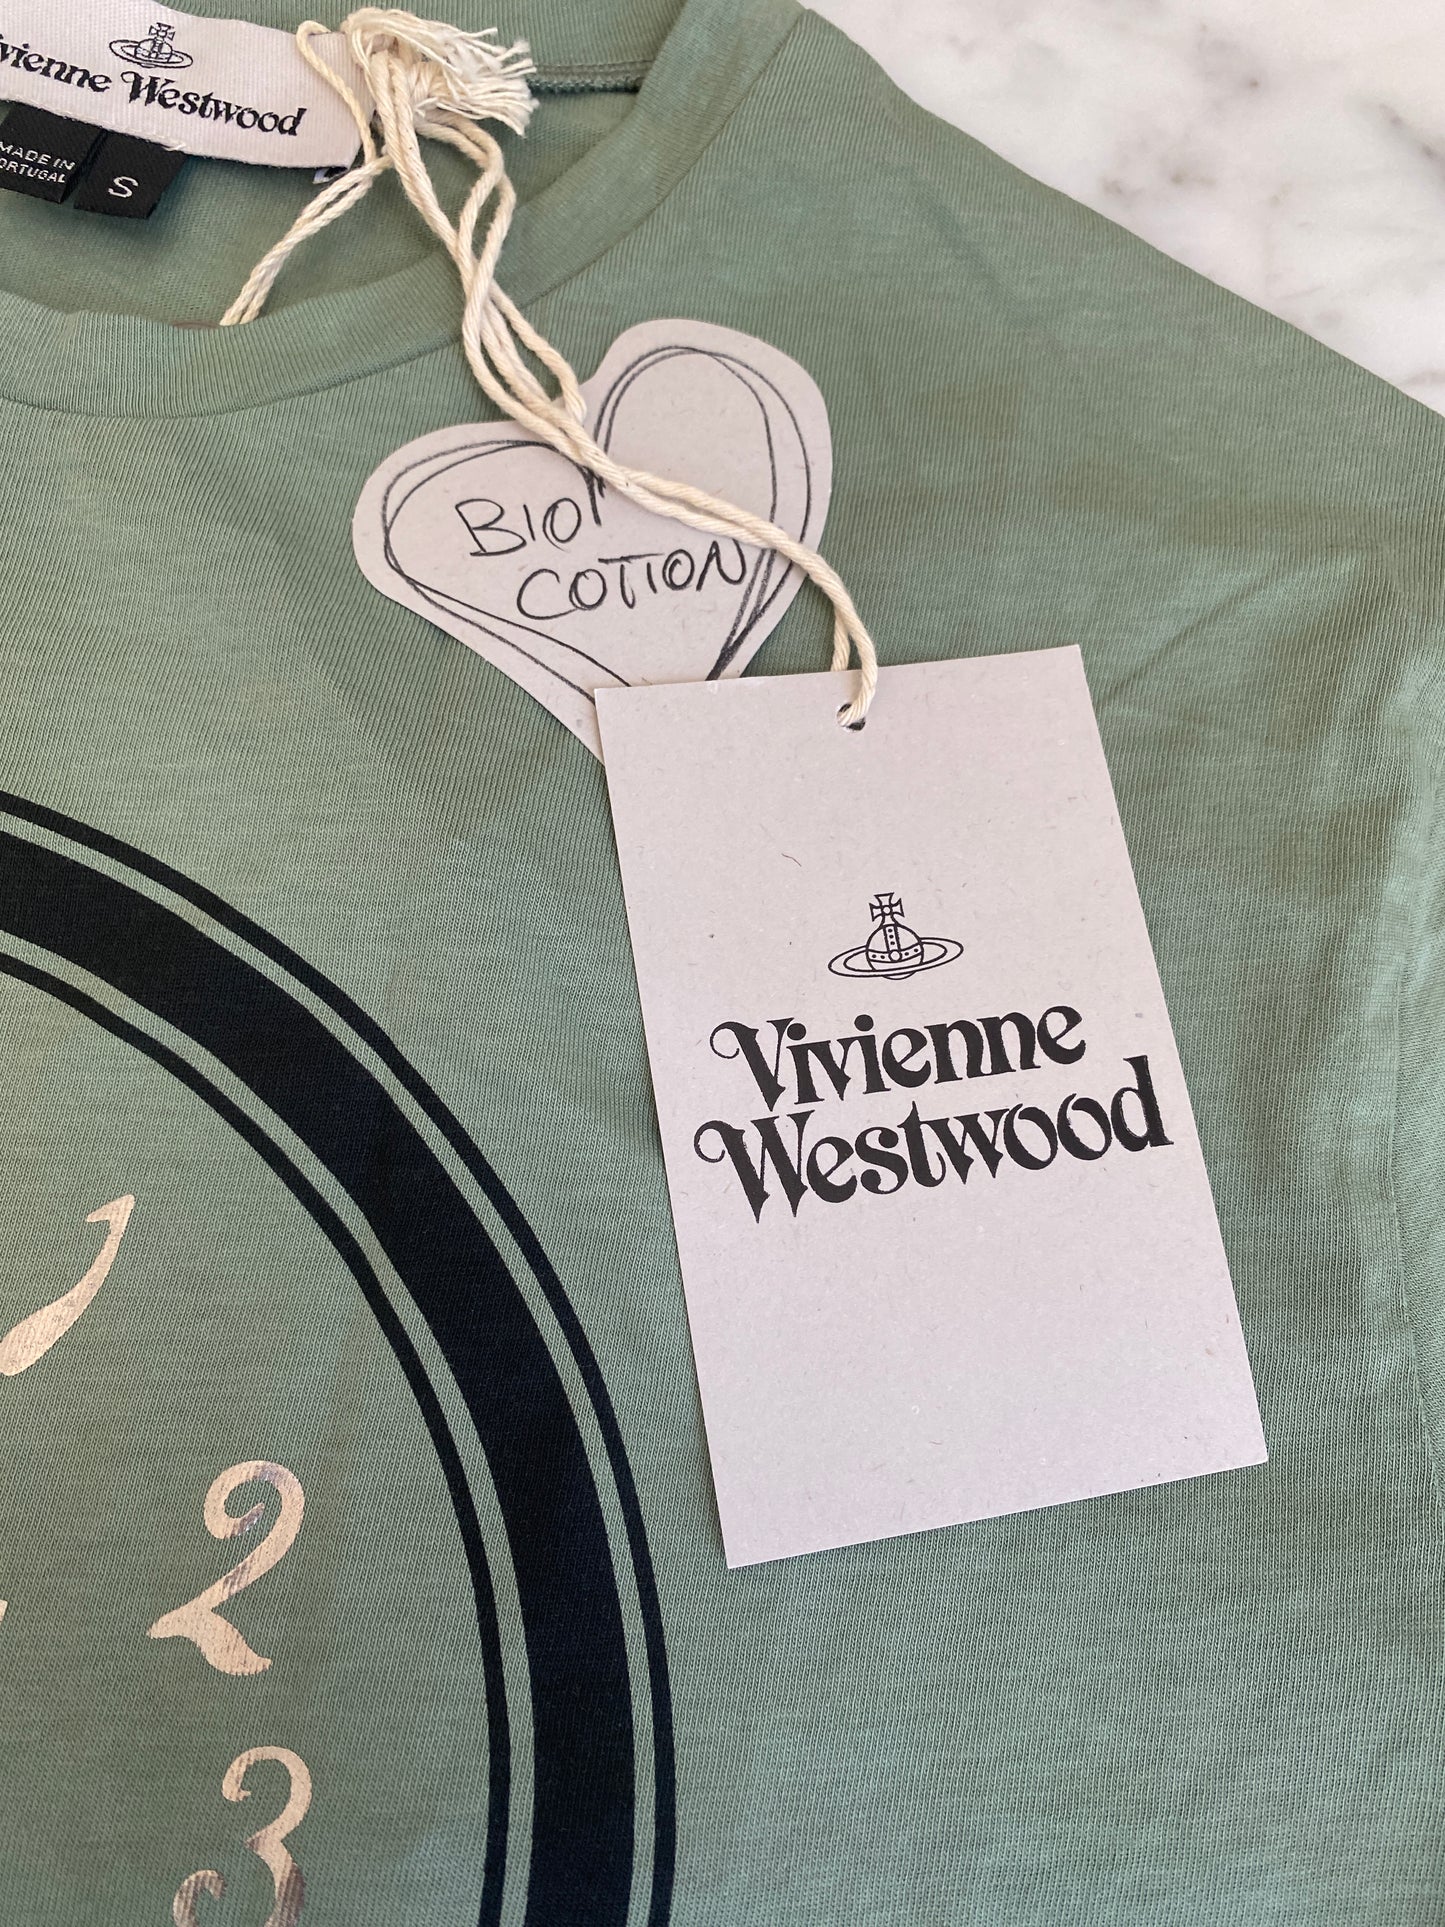 Vivienne Westwood - Green Time Machine Clock Logo T-Shirt